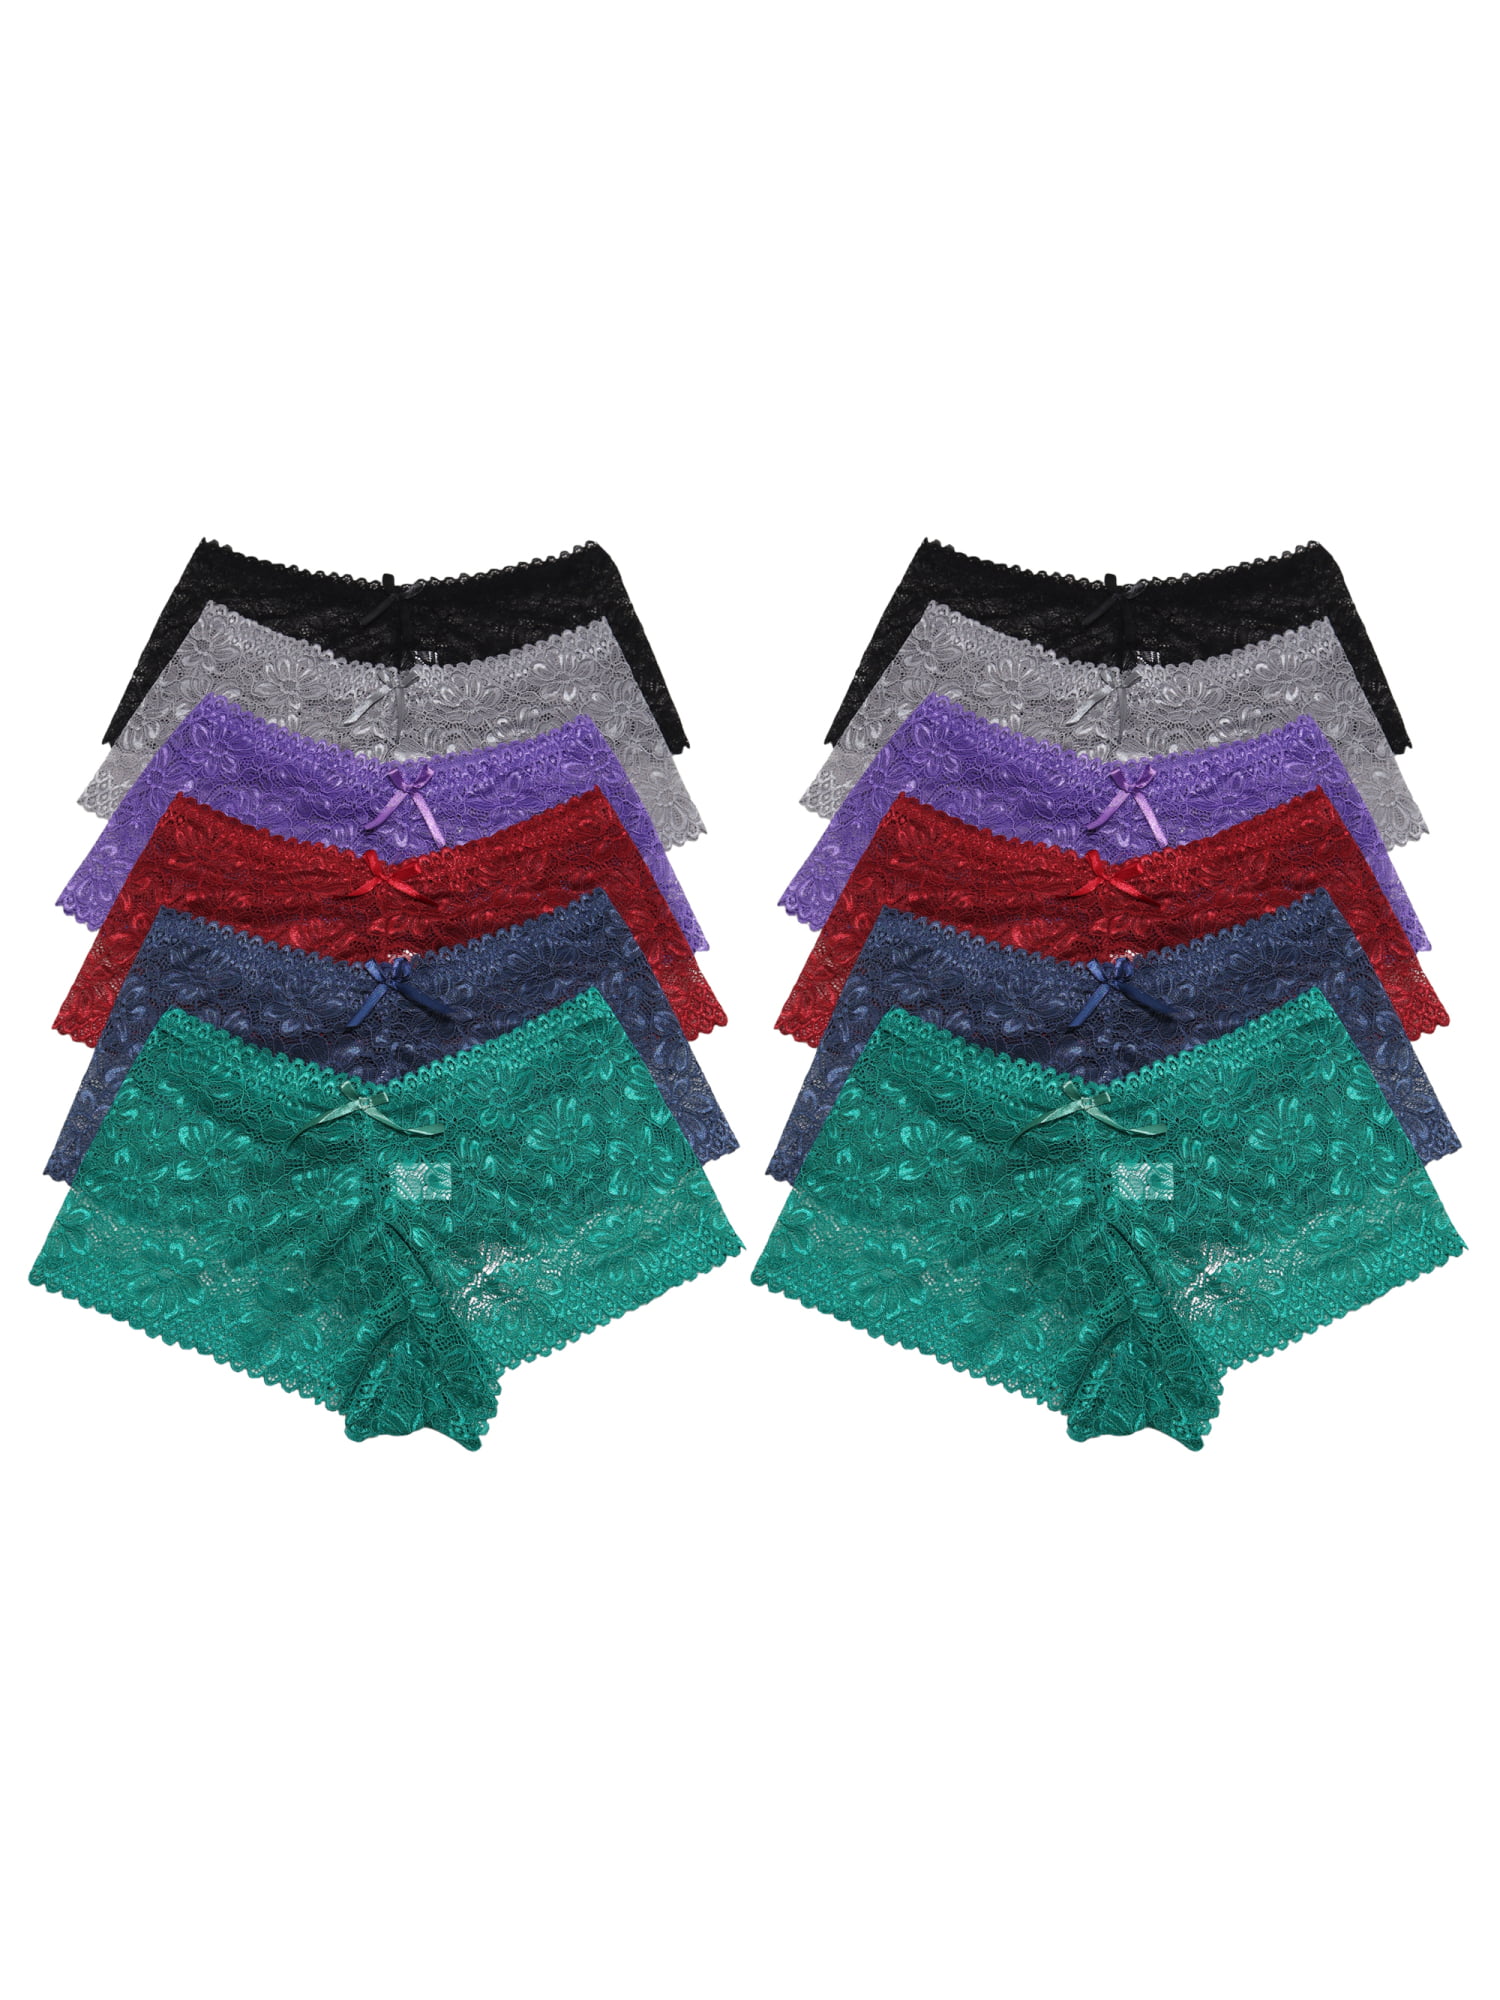 6-12 BOYSHORT BOYKINI CHEEKY WOMEN'S Lace UNDERWEAR Panties Undies